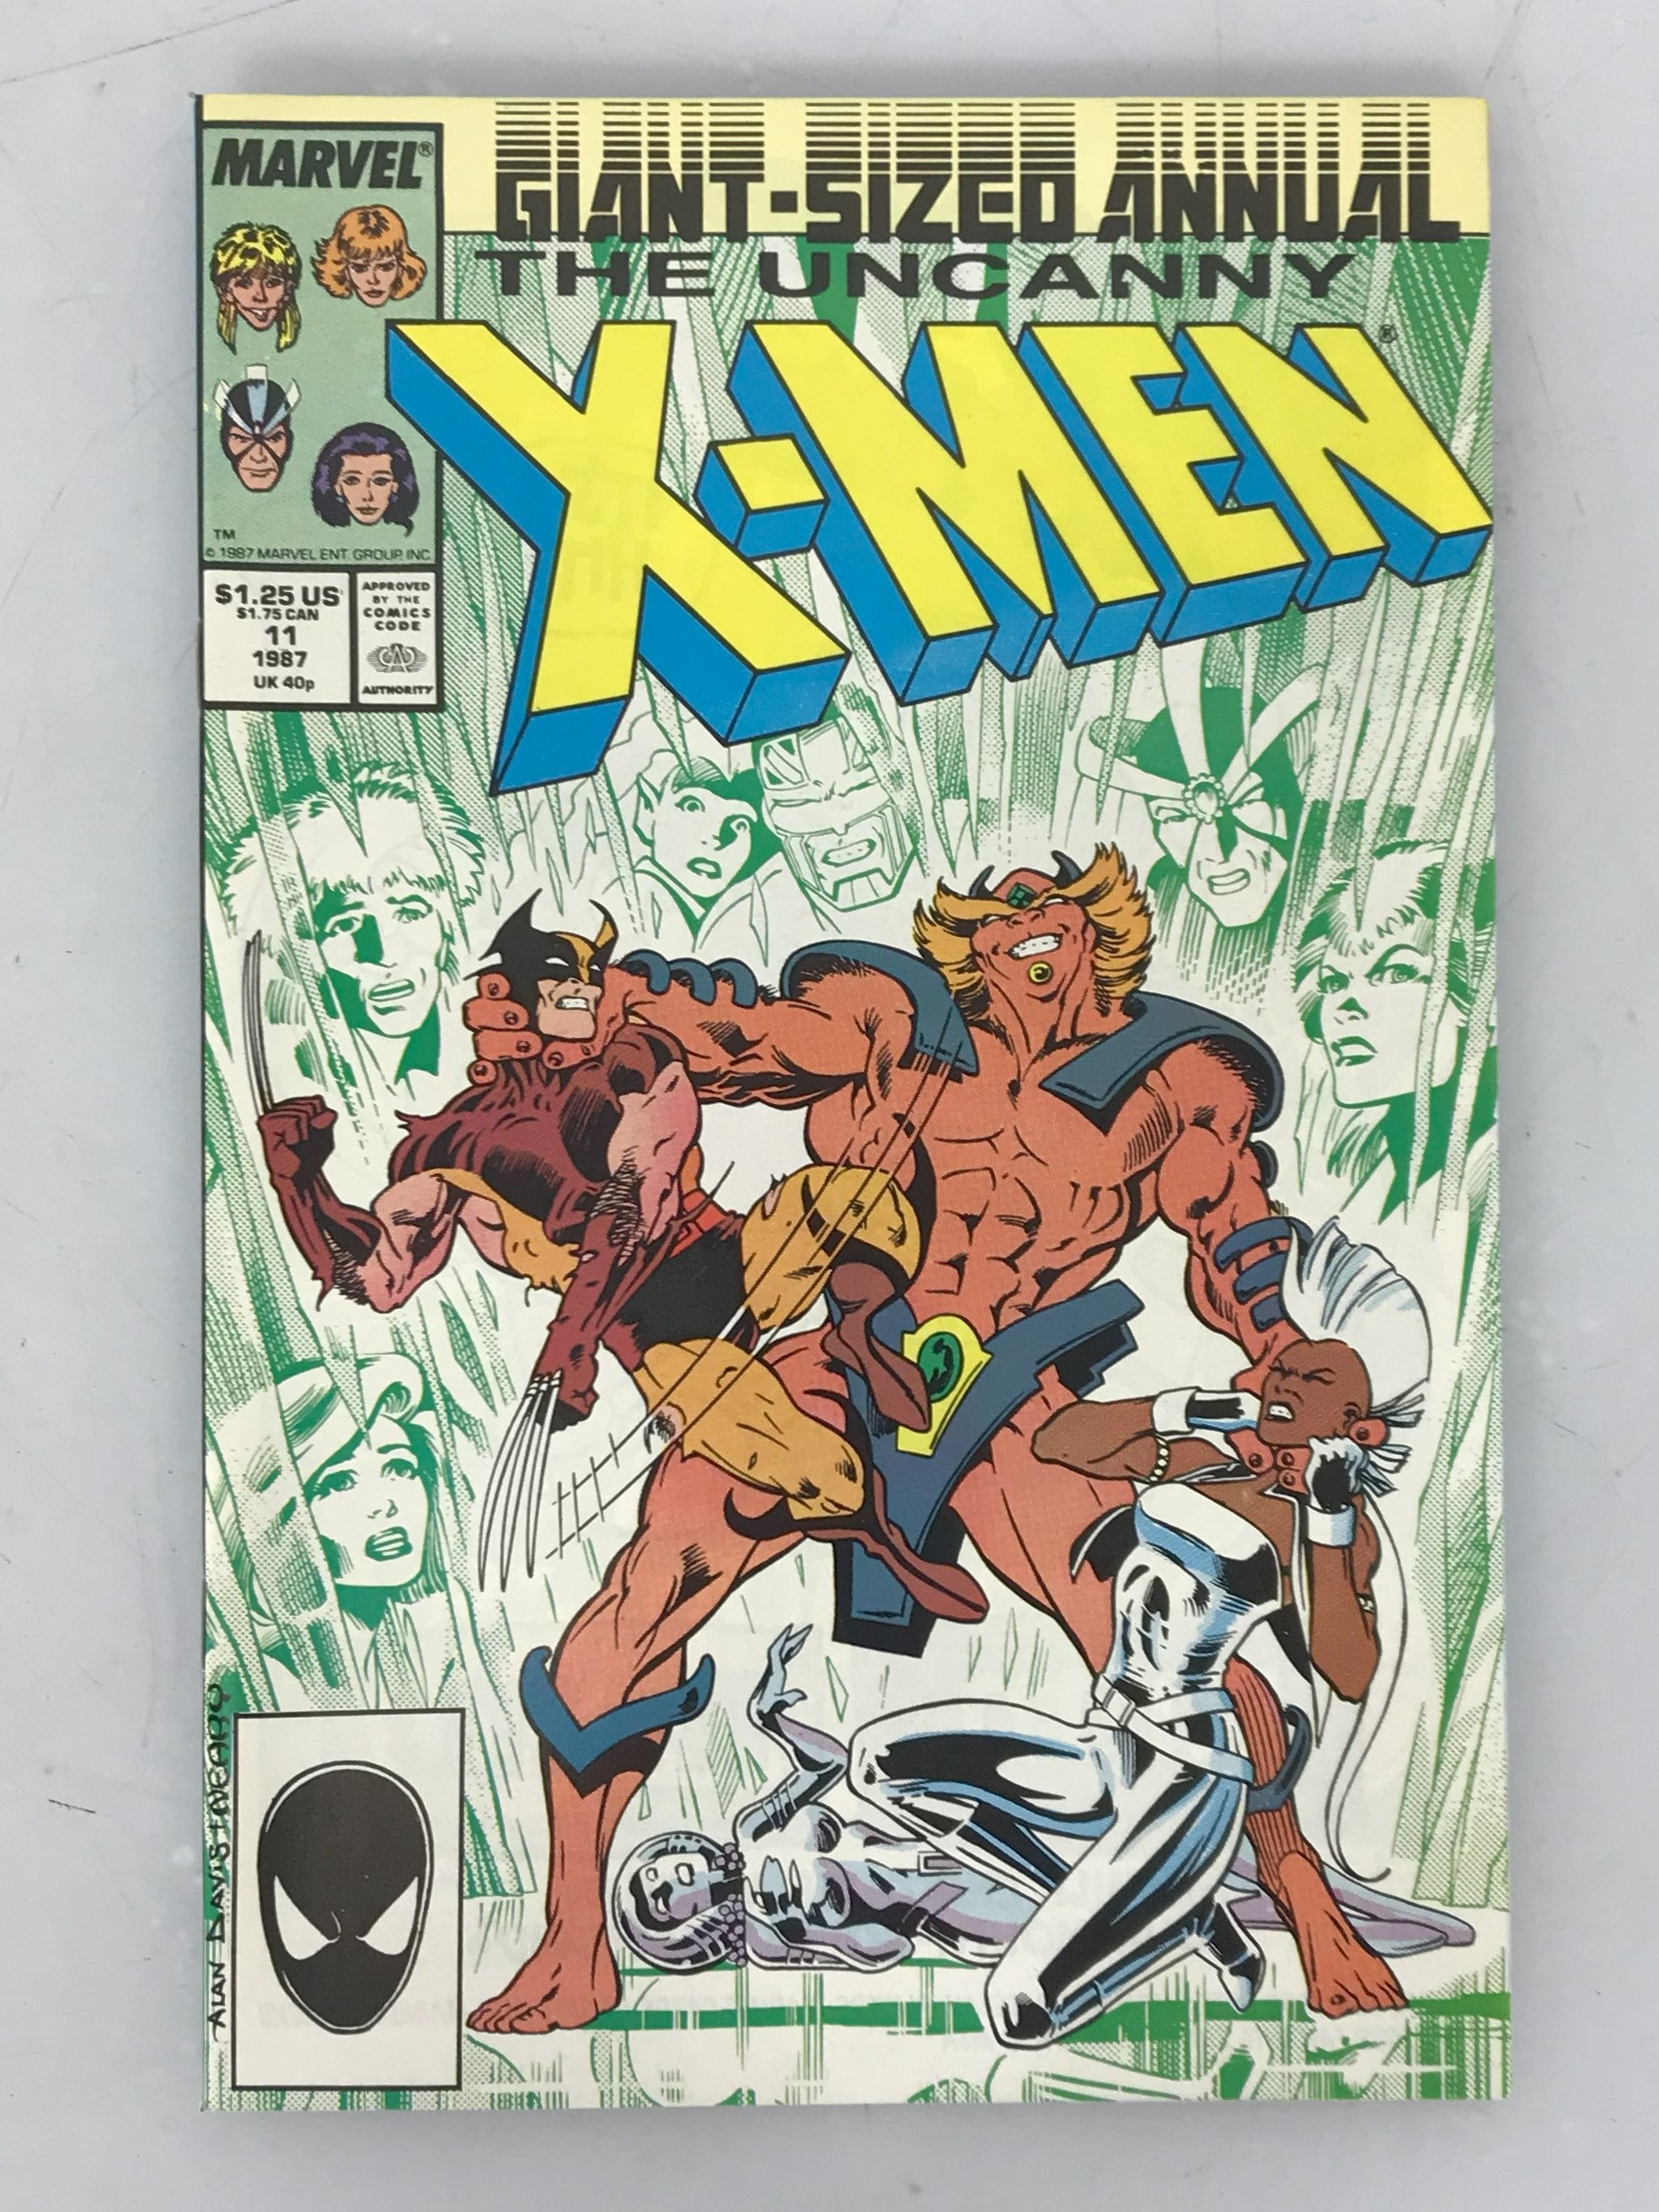 Giant Sized Annual The Uncanny X-Men Vol. 1 No. 11 1987